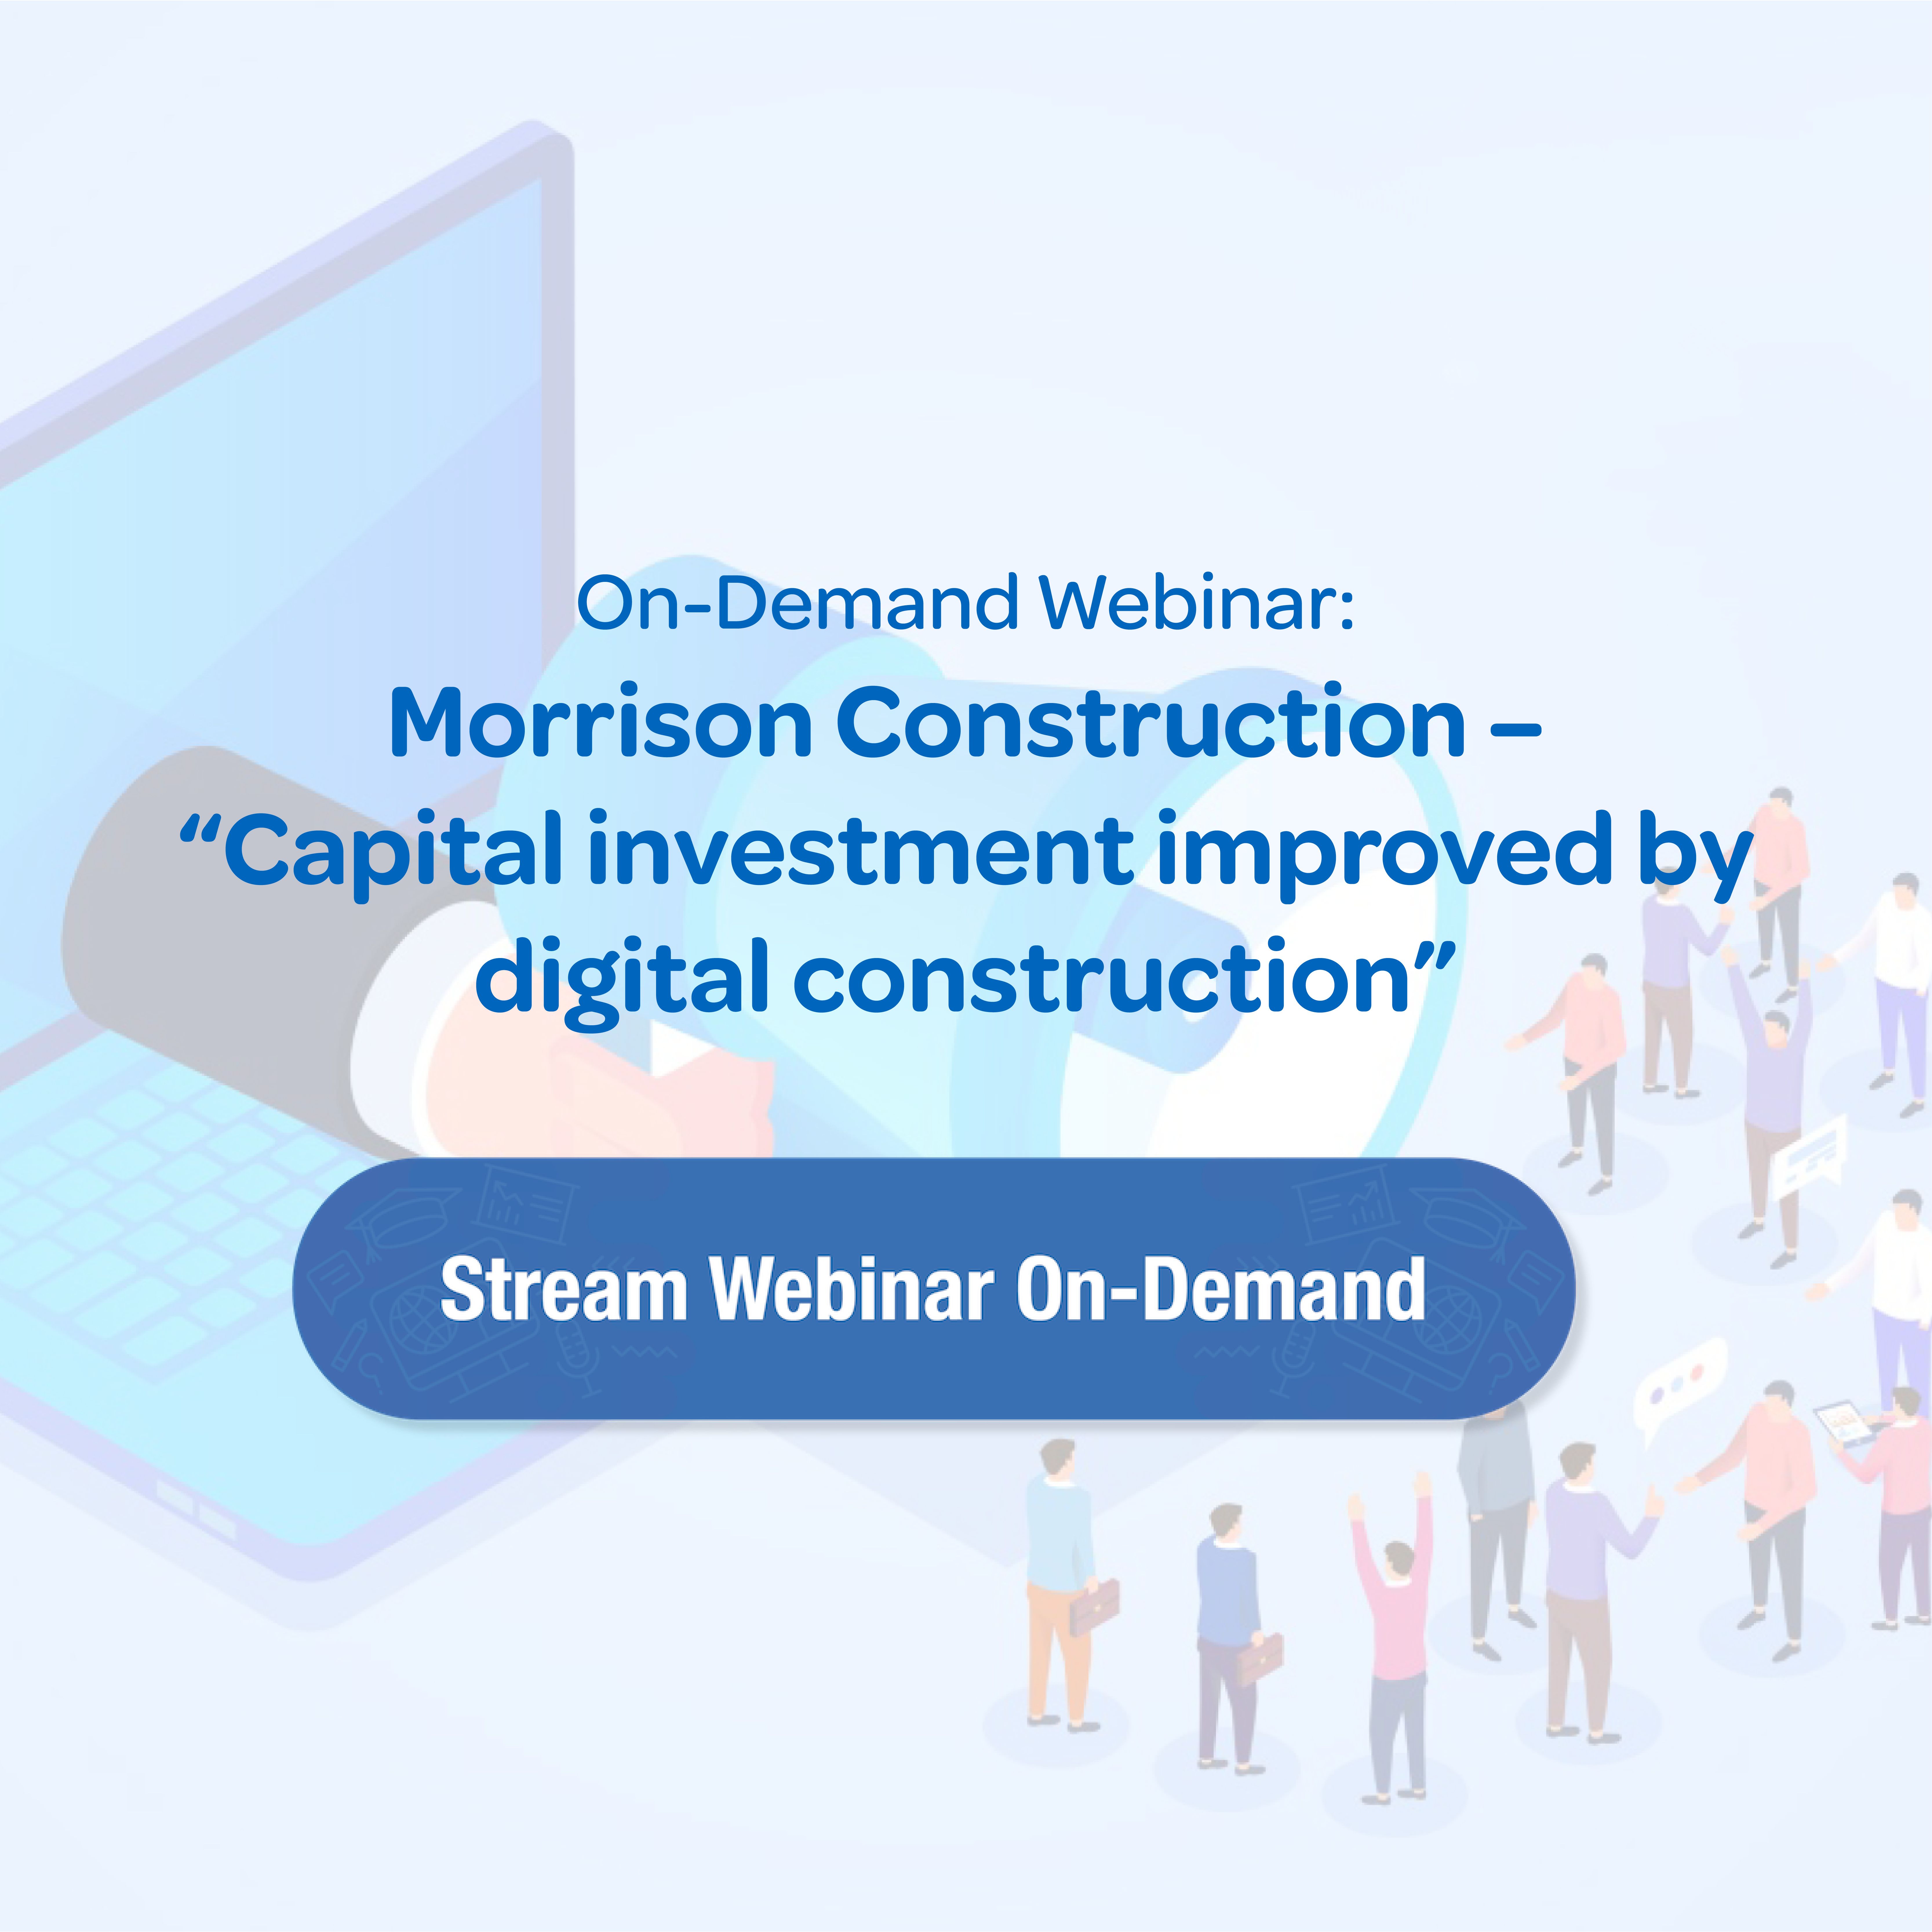 Capital Investment - Morrison Construction Webinar